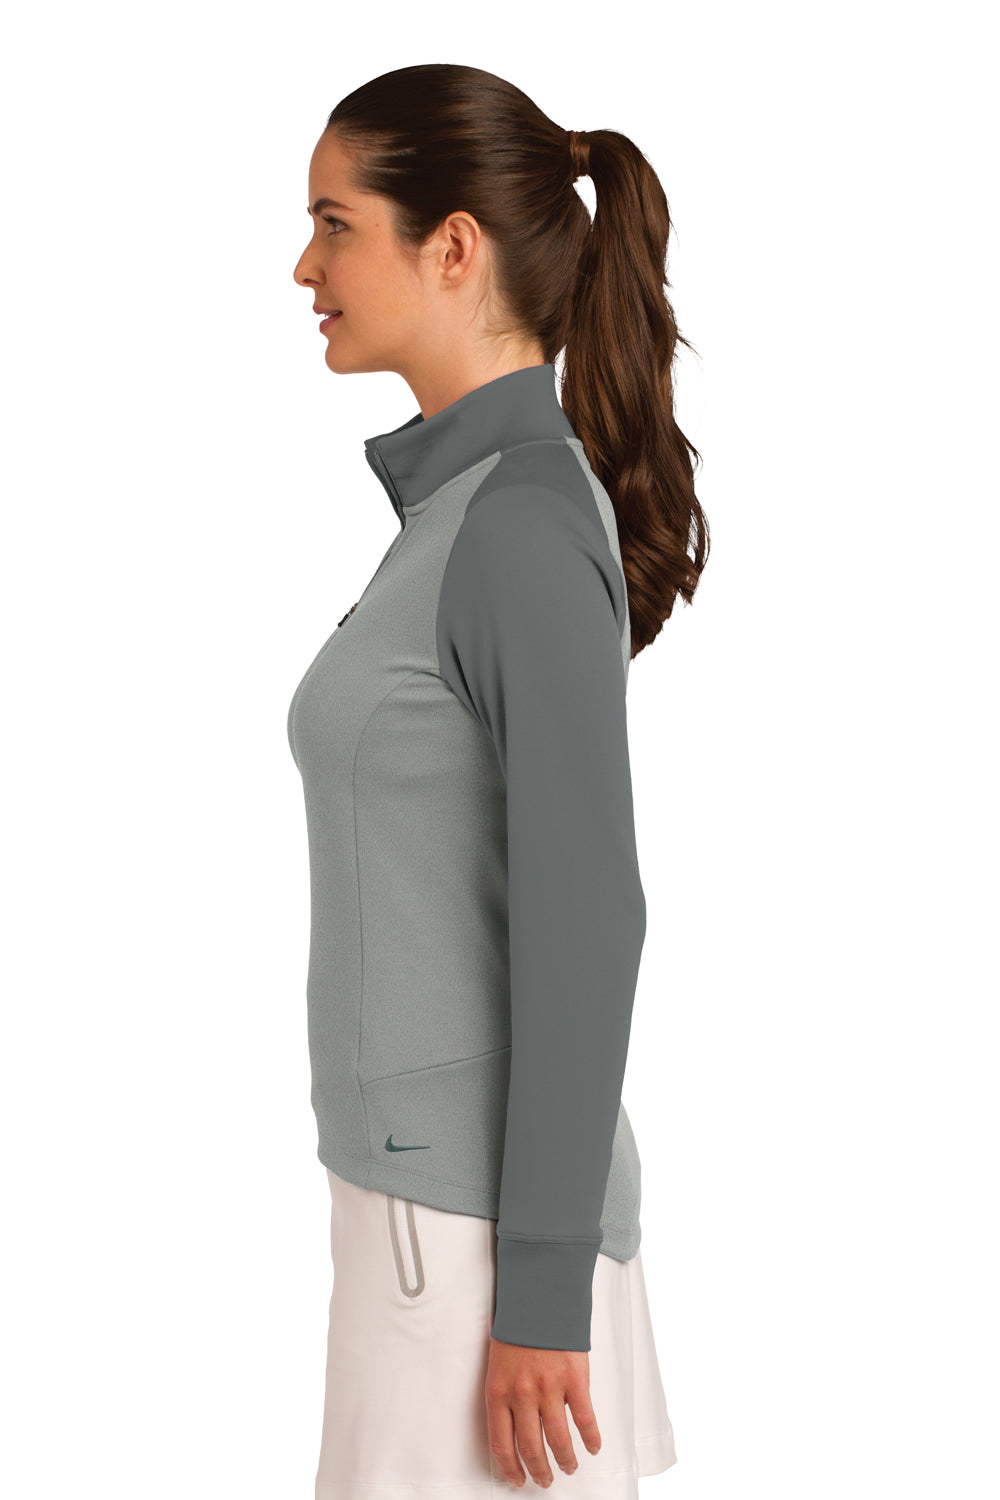 Nike 578674 Womens Dri-Fit Moisture Wicking 1/4 Zip Sweatshirt Heather Grey/Dark Grey Model Side